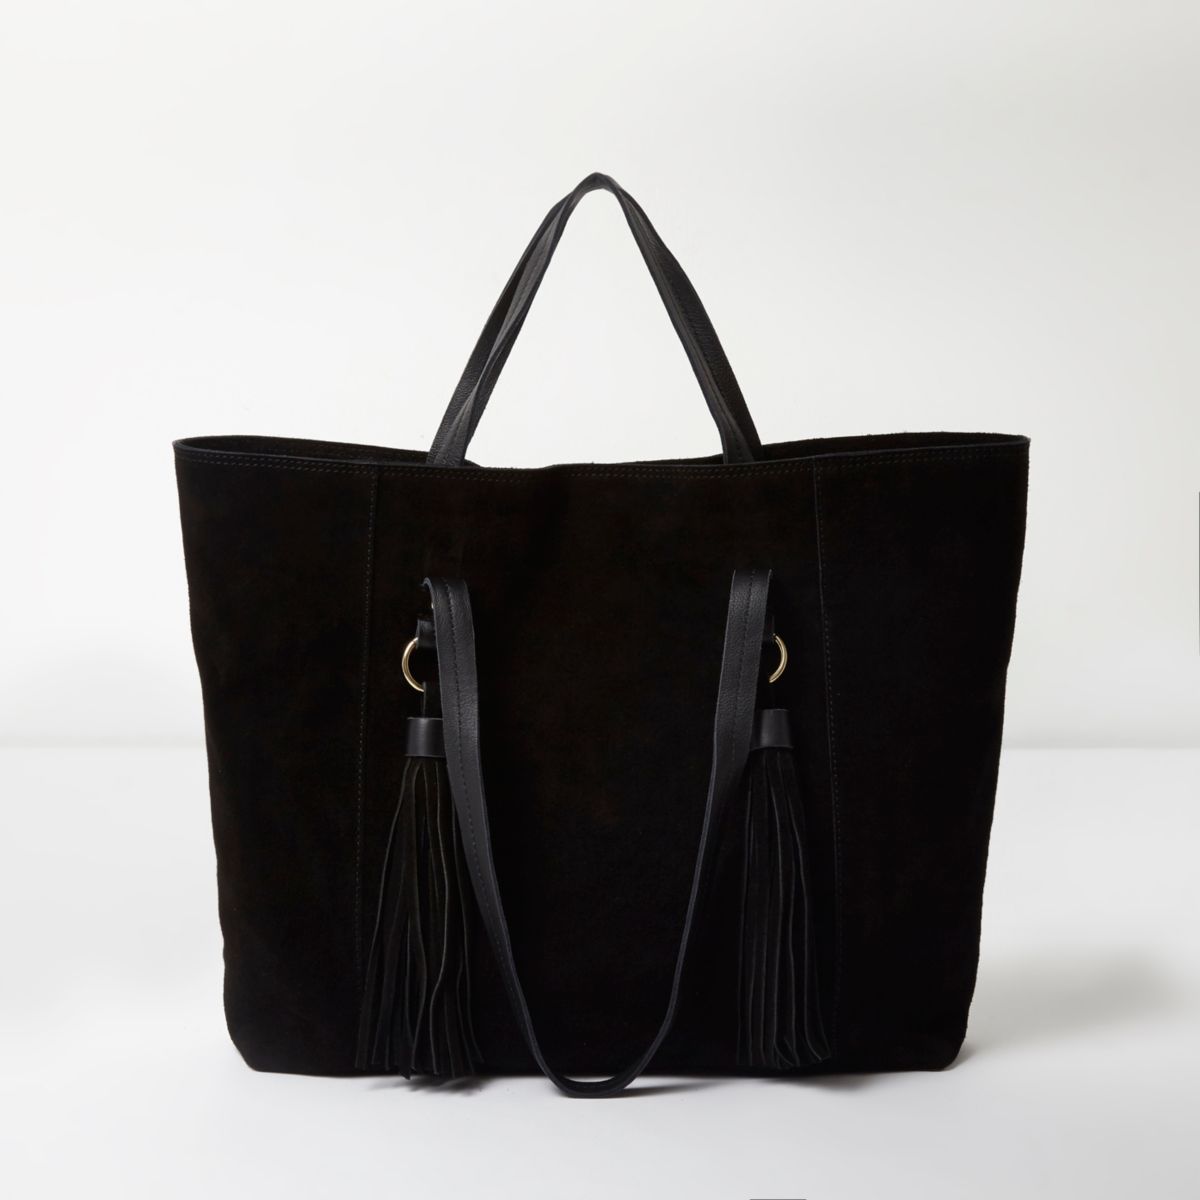 Black suede tassel underarm tote bag - Shopper & Tote Bags - Bags & Purses - women